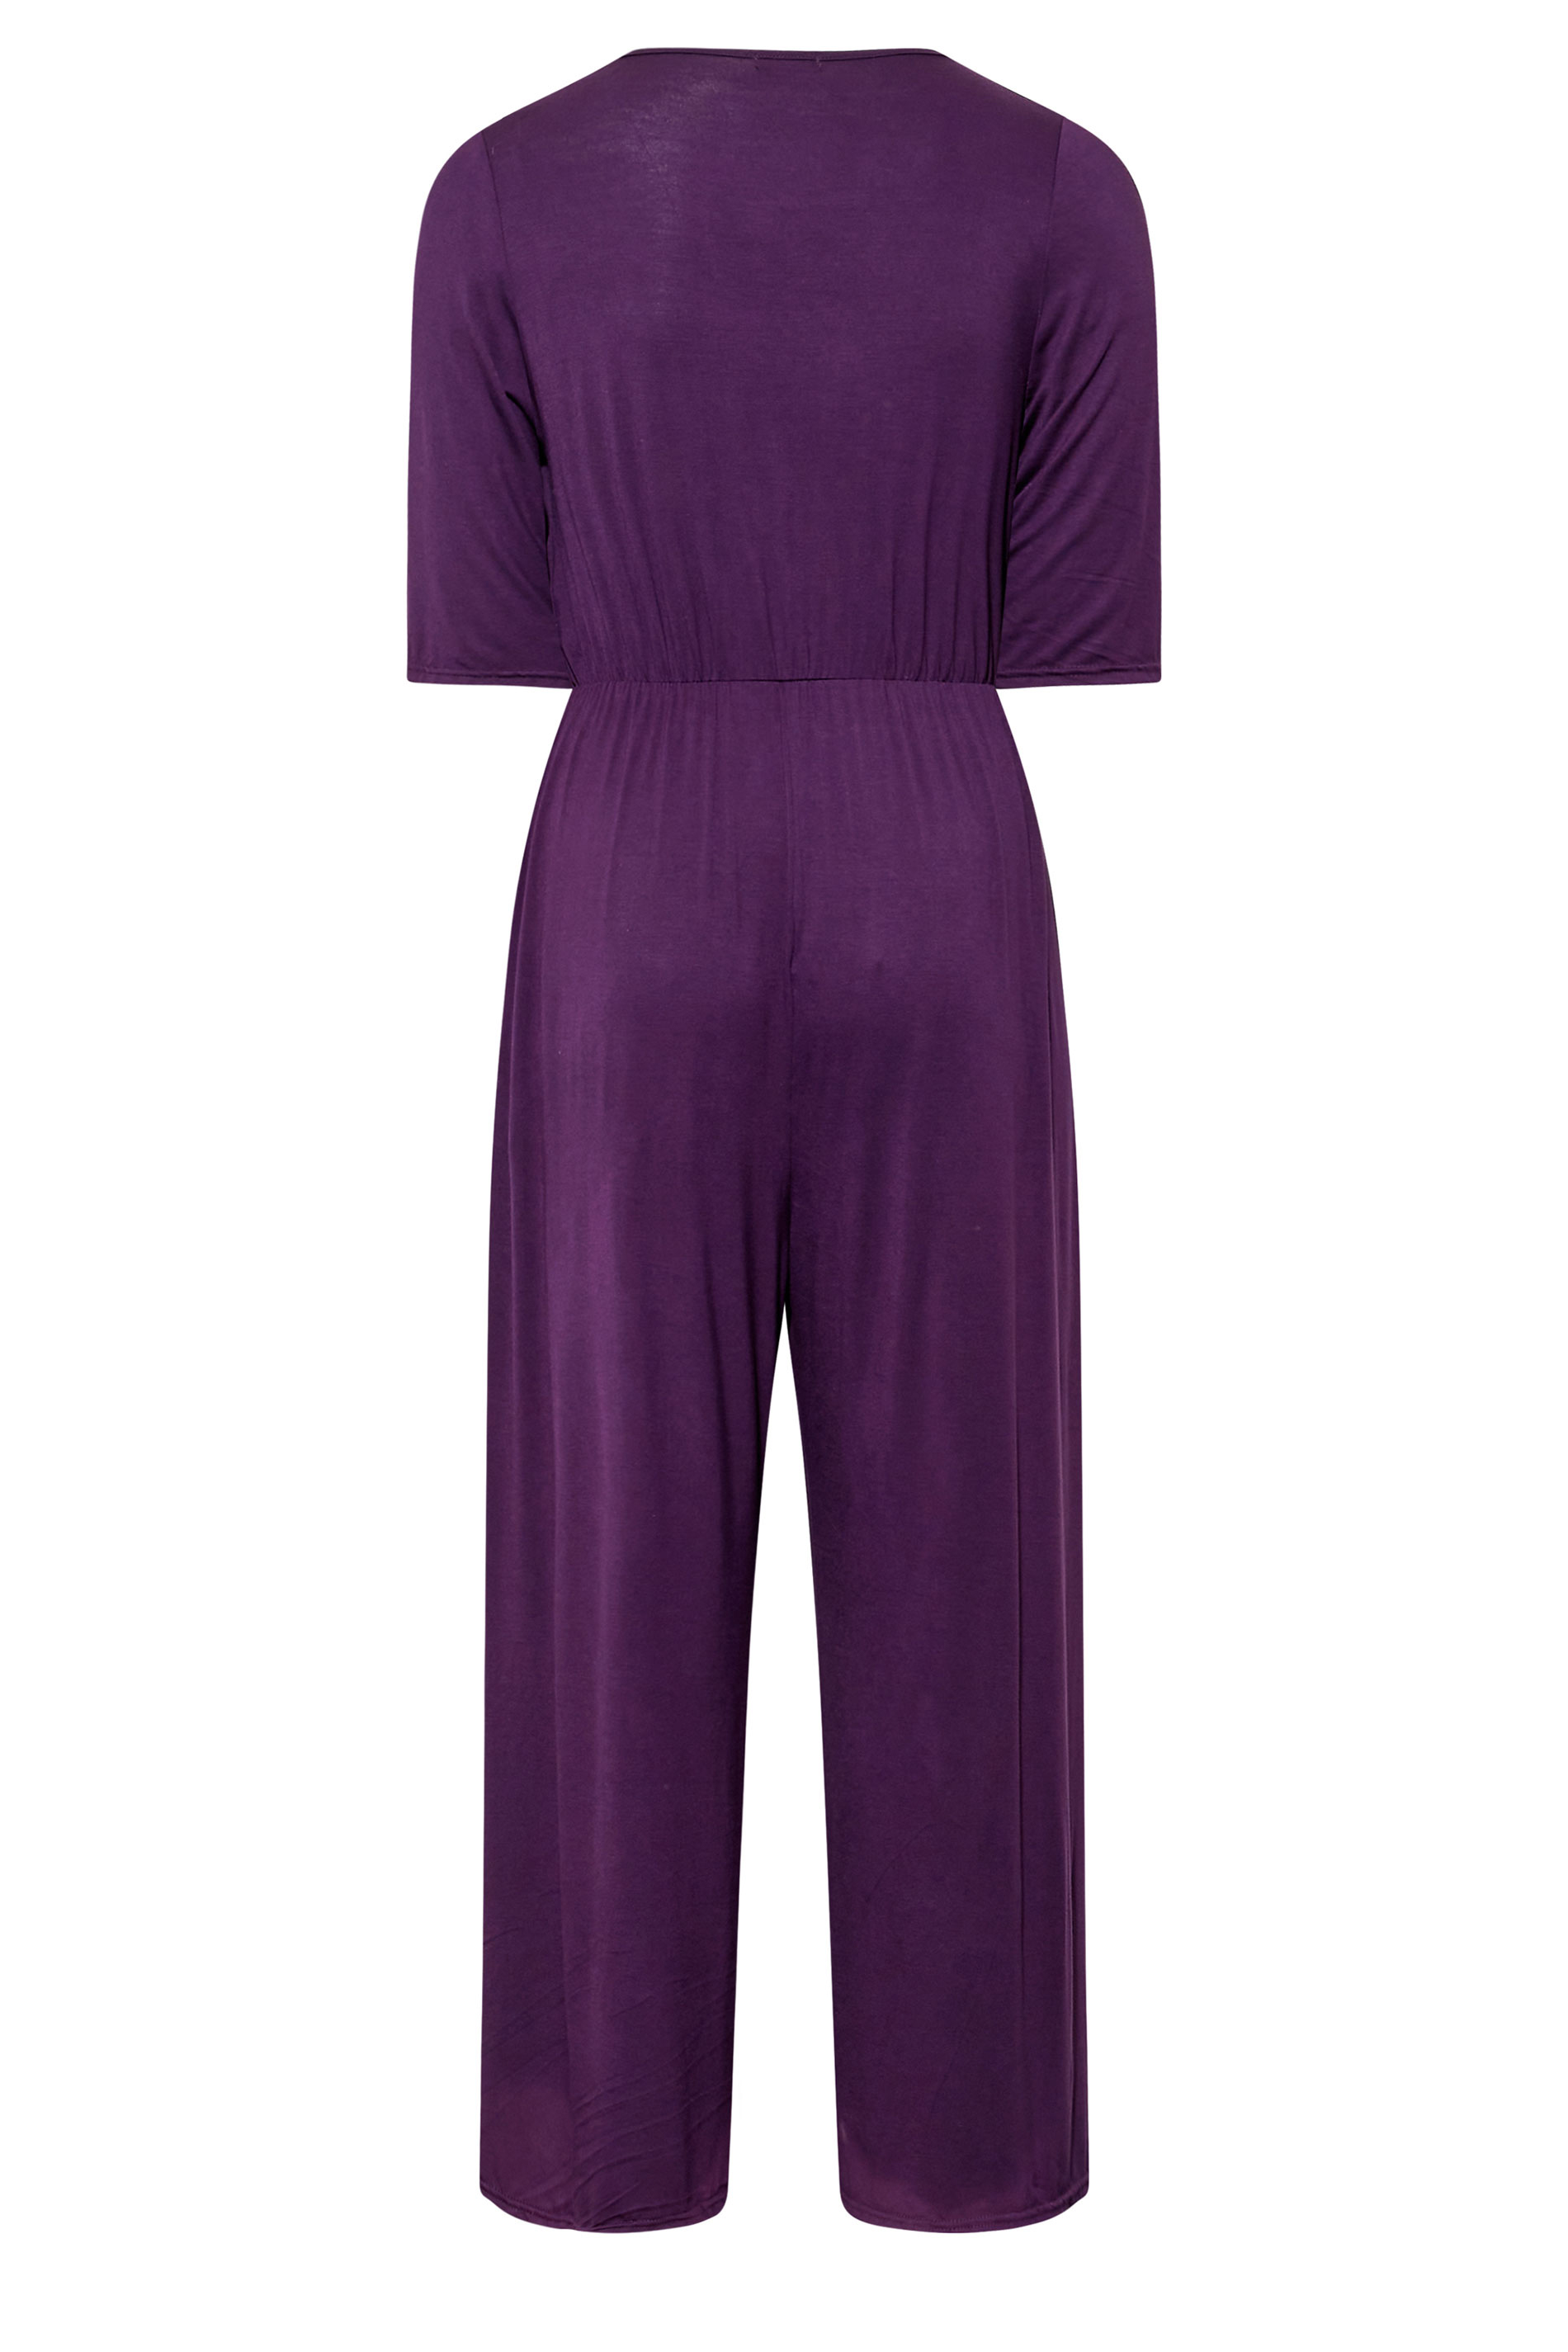 LIMITED Plus Size Dark Purple Wrap Culotte Jumpsuit | Yours Clothing